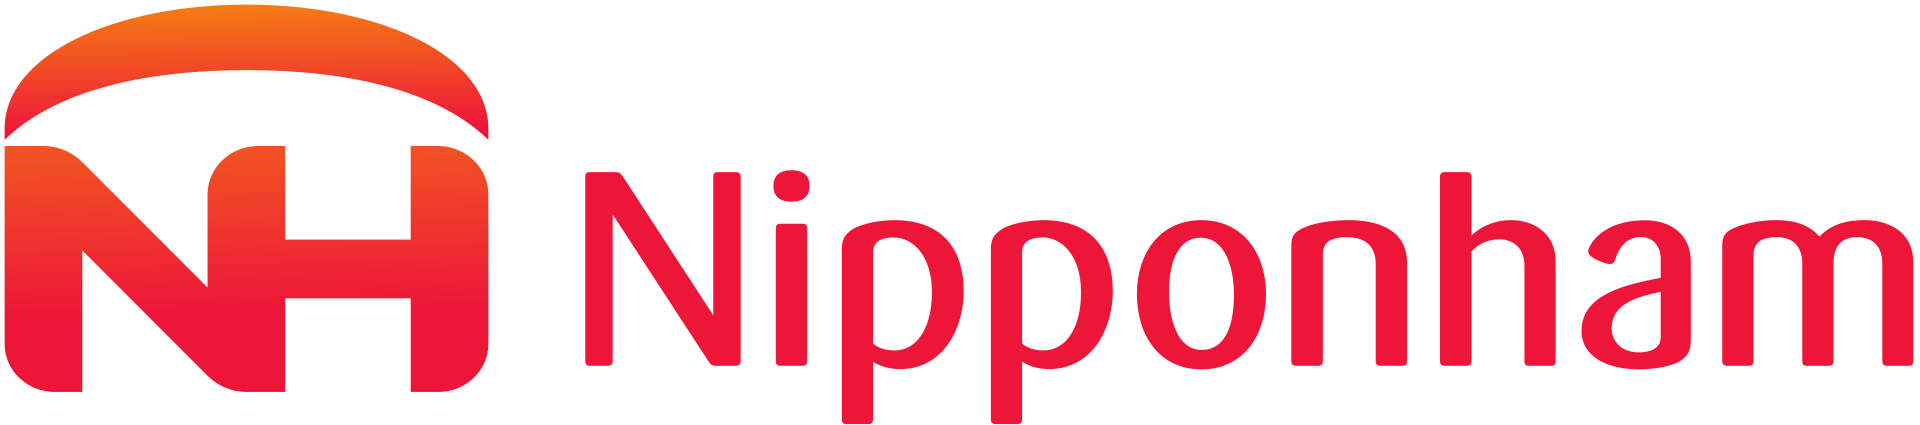 Nipponham Brand Logo